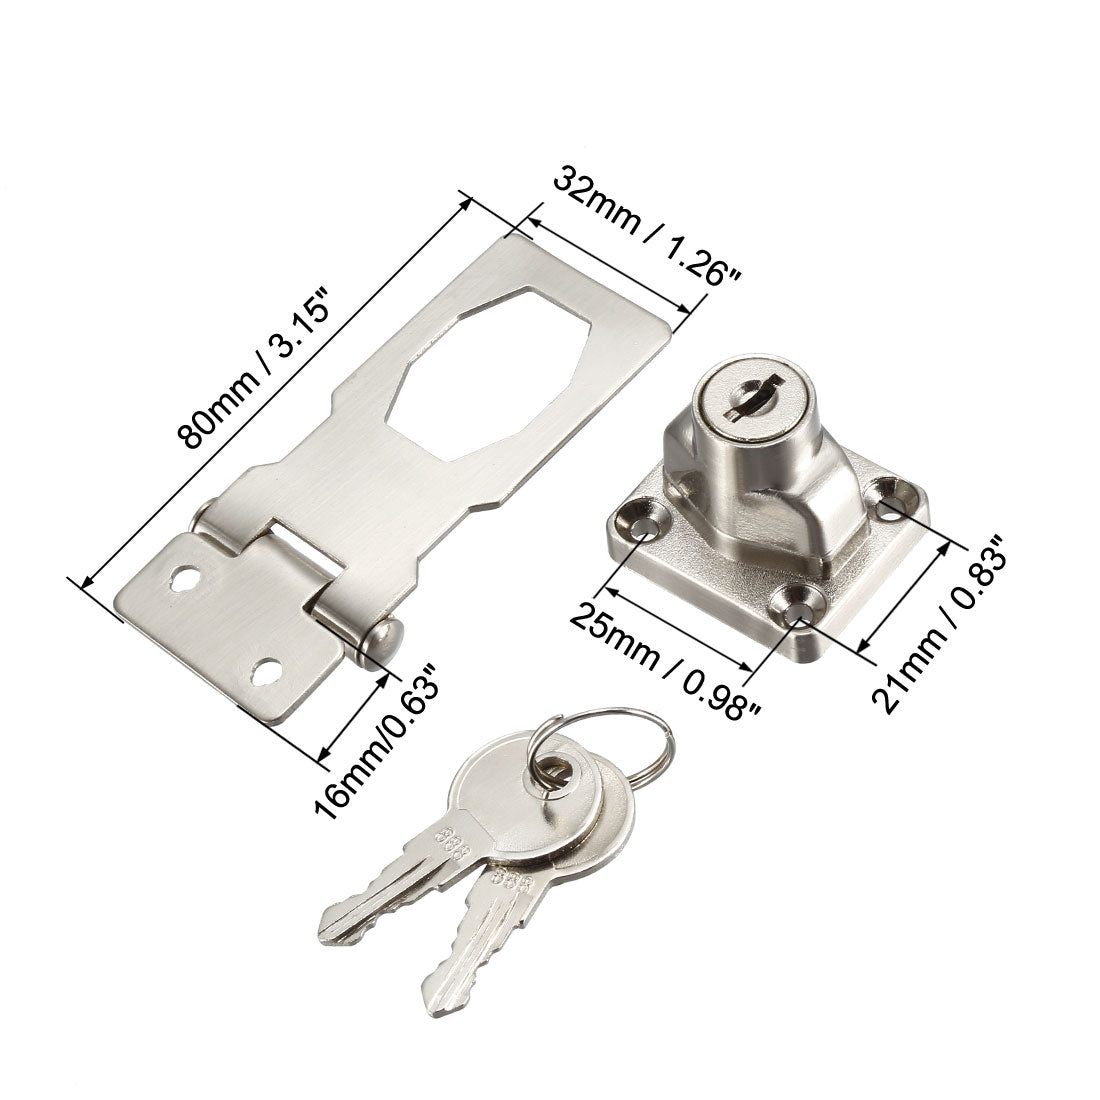 uxcell Uxcell Keyed Hasp Lock 80mm Twist Knob Keyed Locking Hasp for Door Cabinet Keyed Alike Silver Tone 2 Pcs